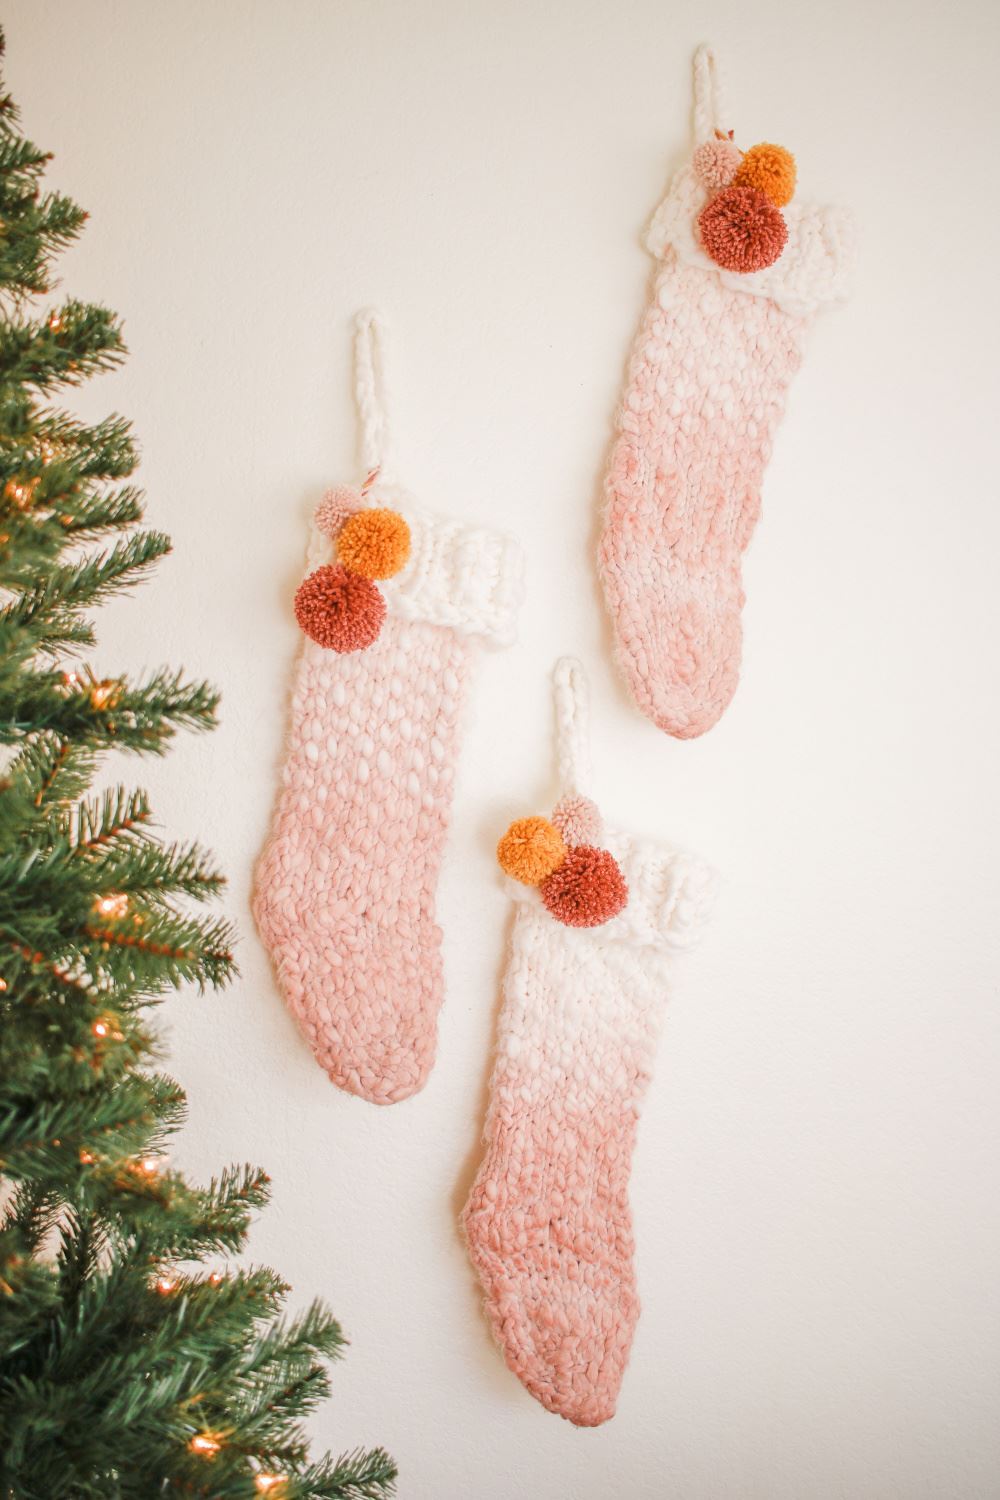 Make Your Own Tie-Dye Family Stockings